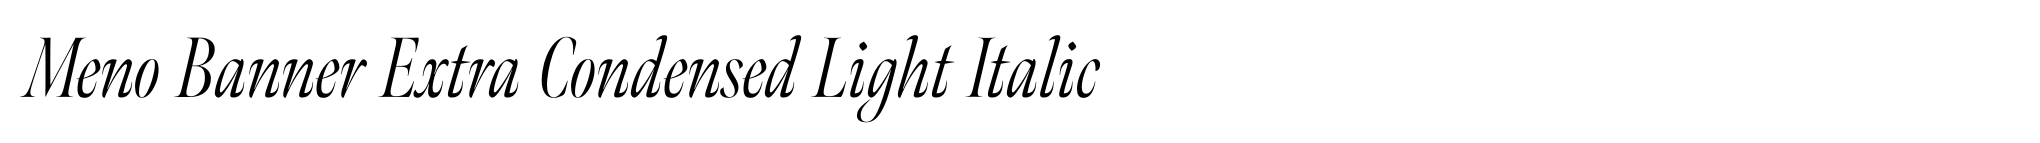 Meno Banner Extra Condensed Light Italic image